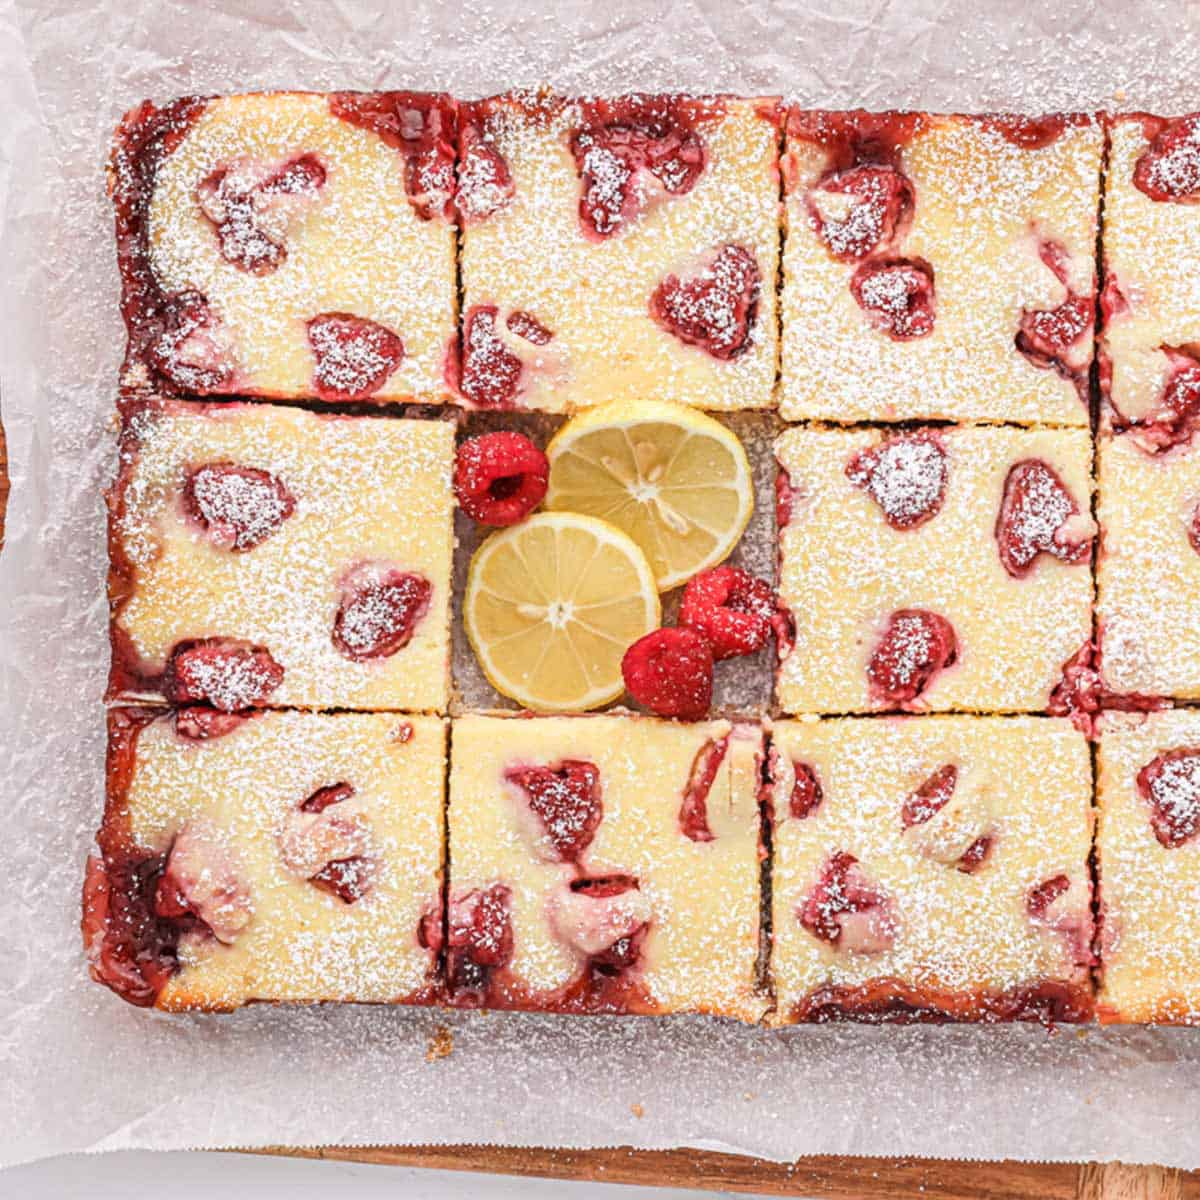 https://grandbaby-cakes.com/wp-content/uploads/2015/02/lemon-raspberry-bars-recipe.jpg